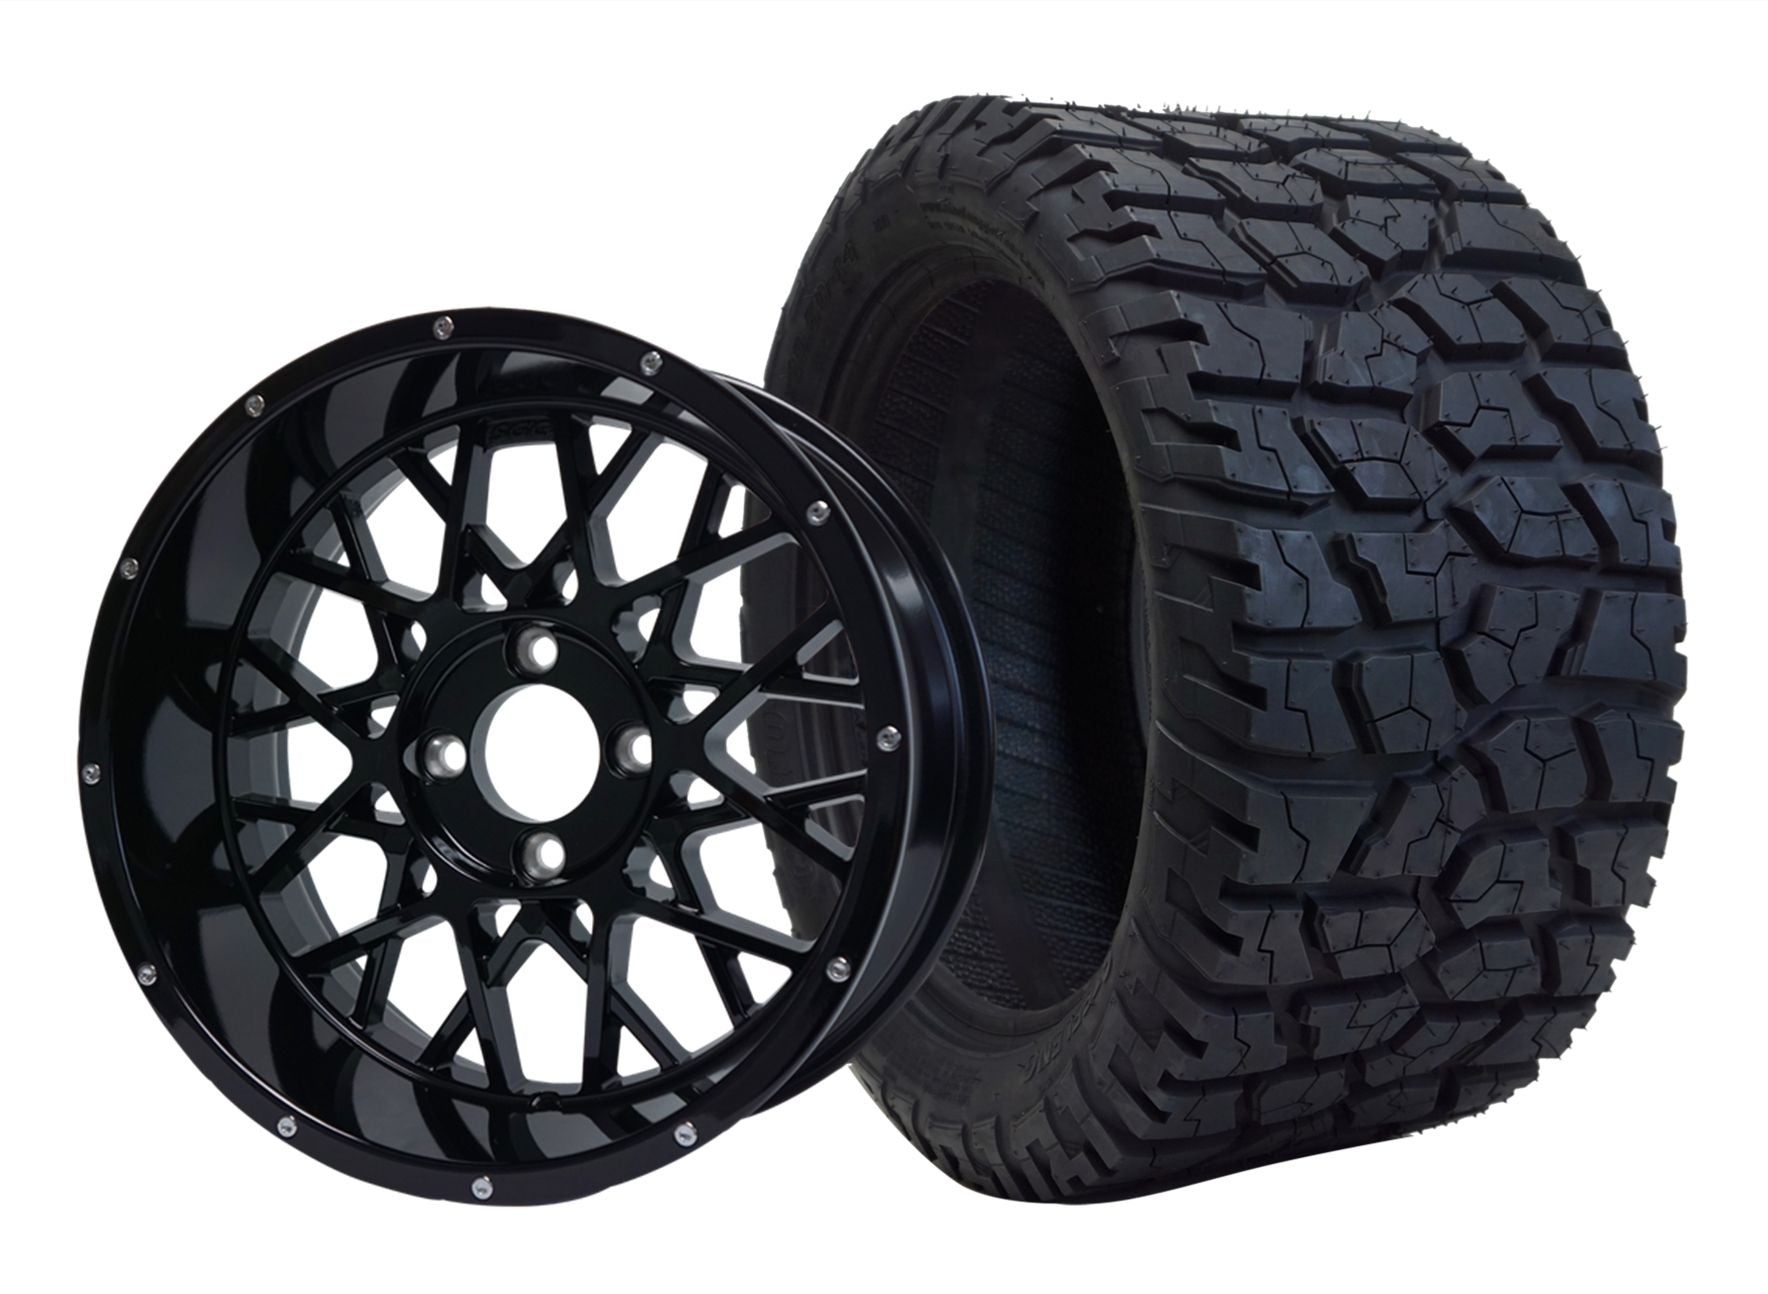 SGC 14" x 7" Venom Glossy Black Wheel - Aluminum Alloy STEELENG 22"x10.5"-14" GATOR All Terrain Tire DOT Approved WH1420-TR1401